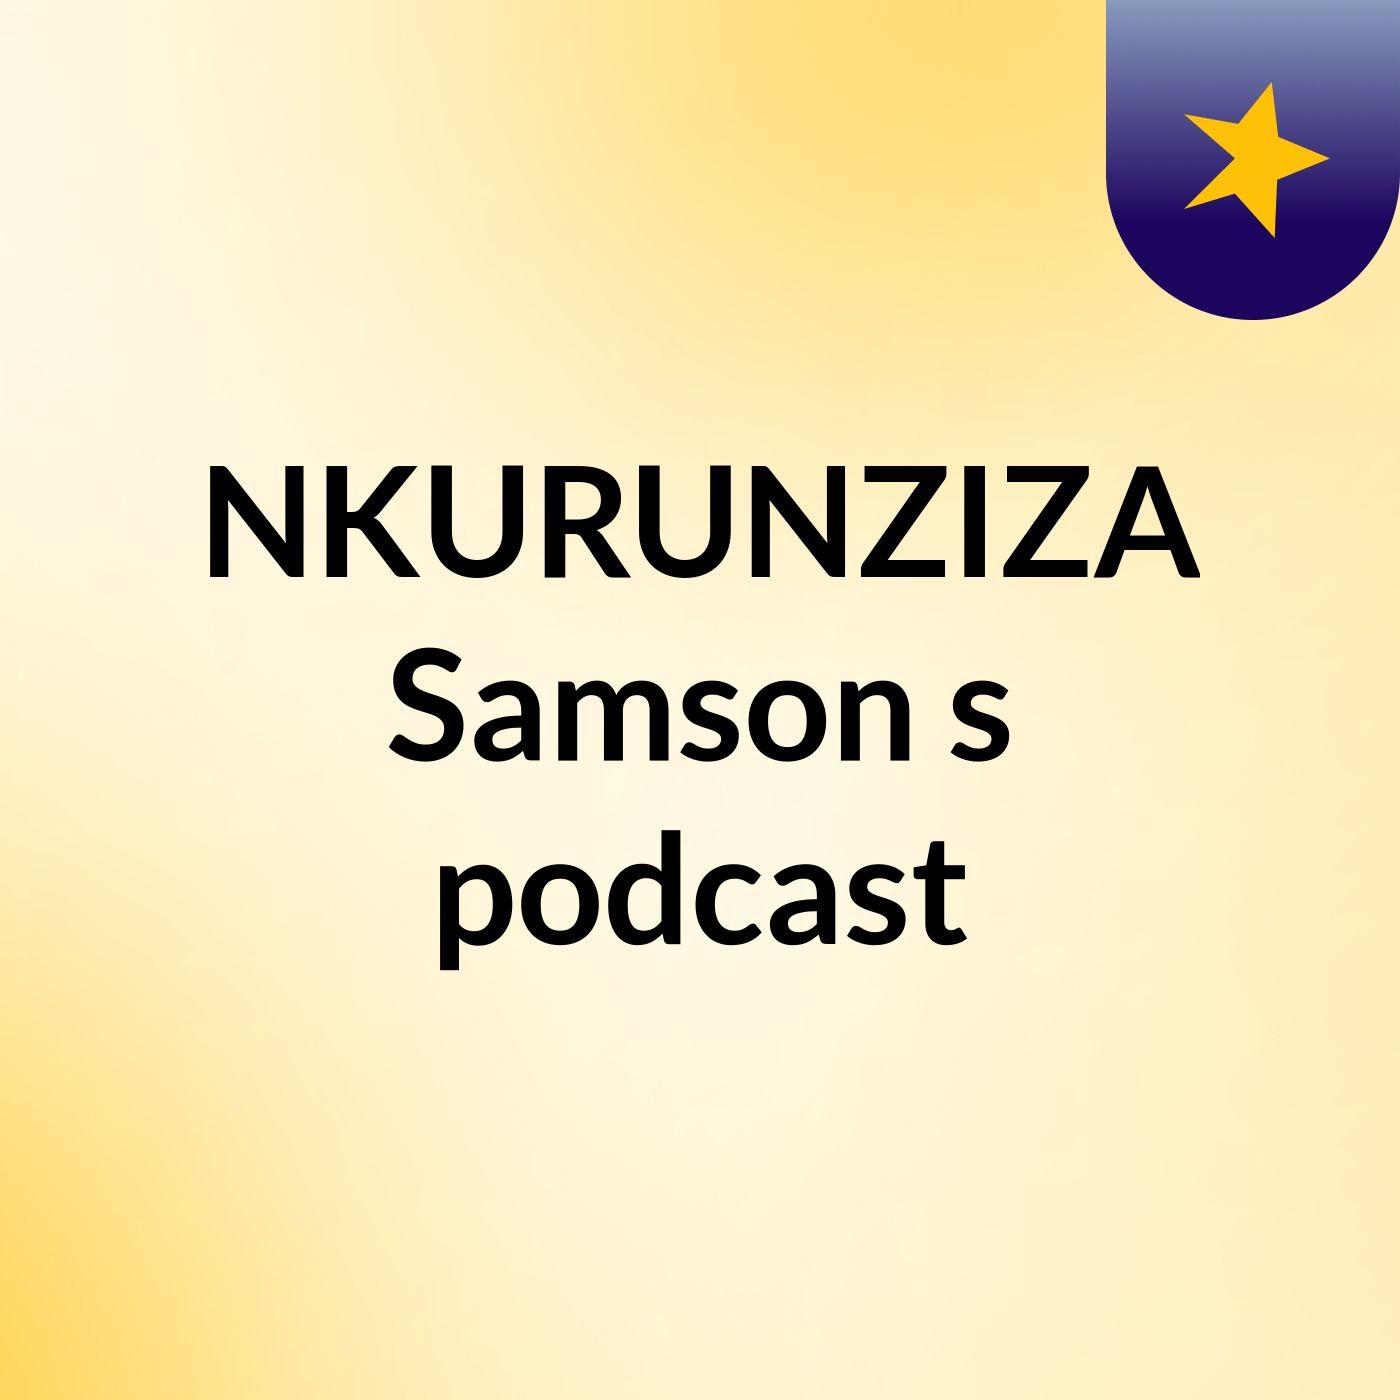 NKURUNZIZA Samson's podcast